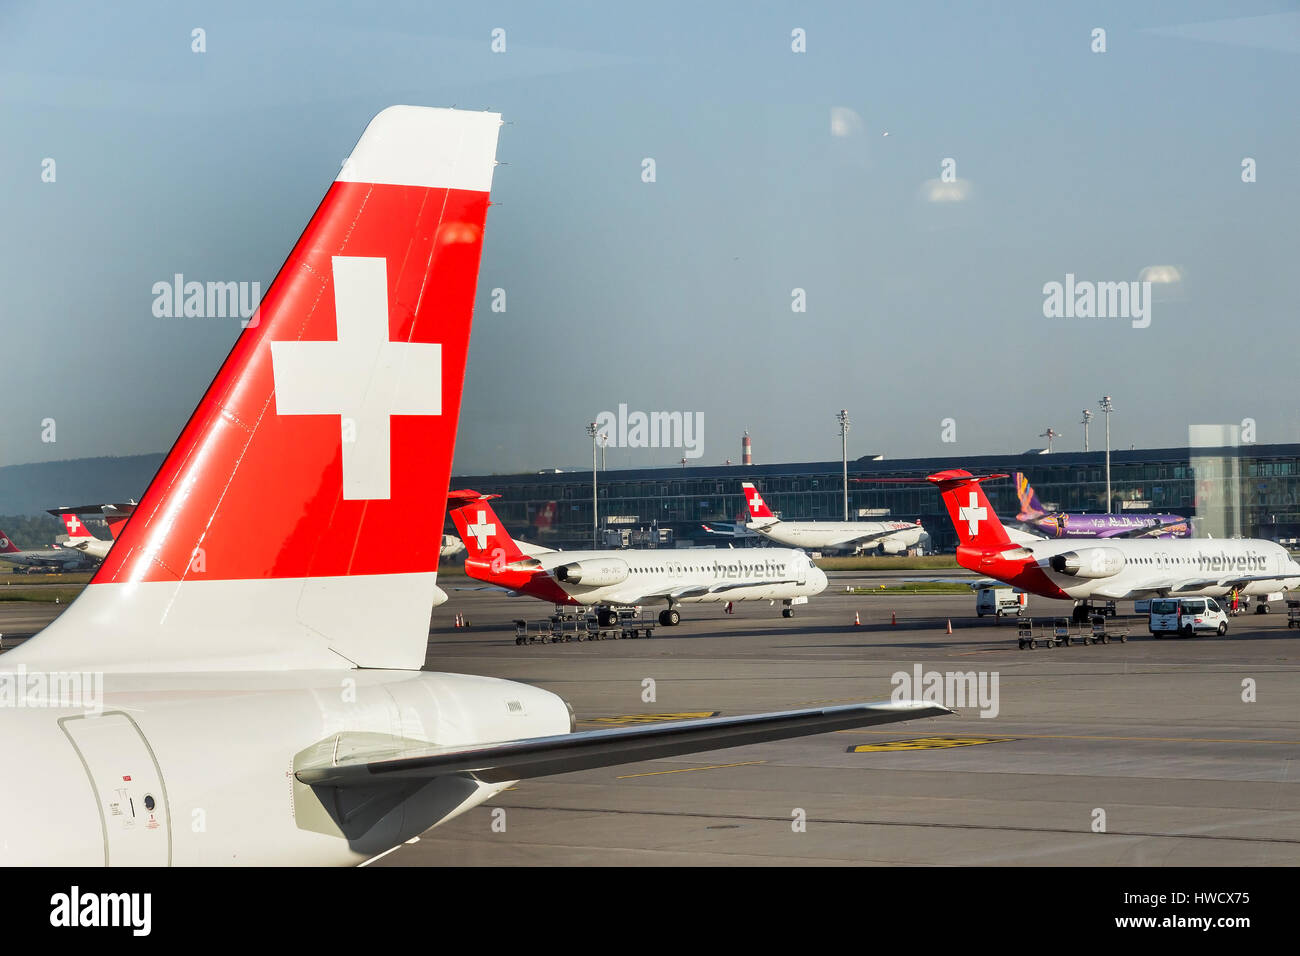 Svizzera, Zurigo: aerei degli svizzeri sull'aeroporto di Kloten, Schweiz, Zürich: Flugzeuge der Swiss auf dem Flughafen Kloten Foto Stock